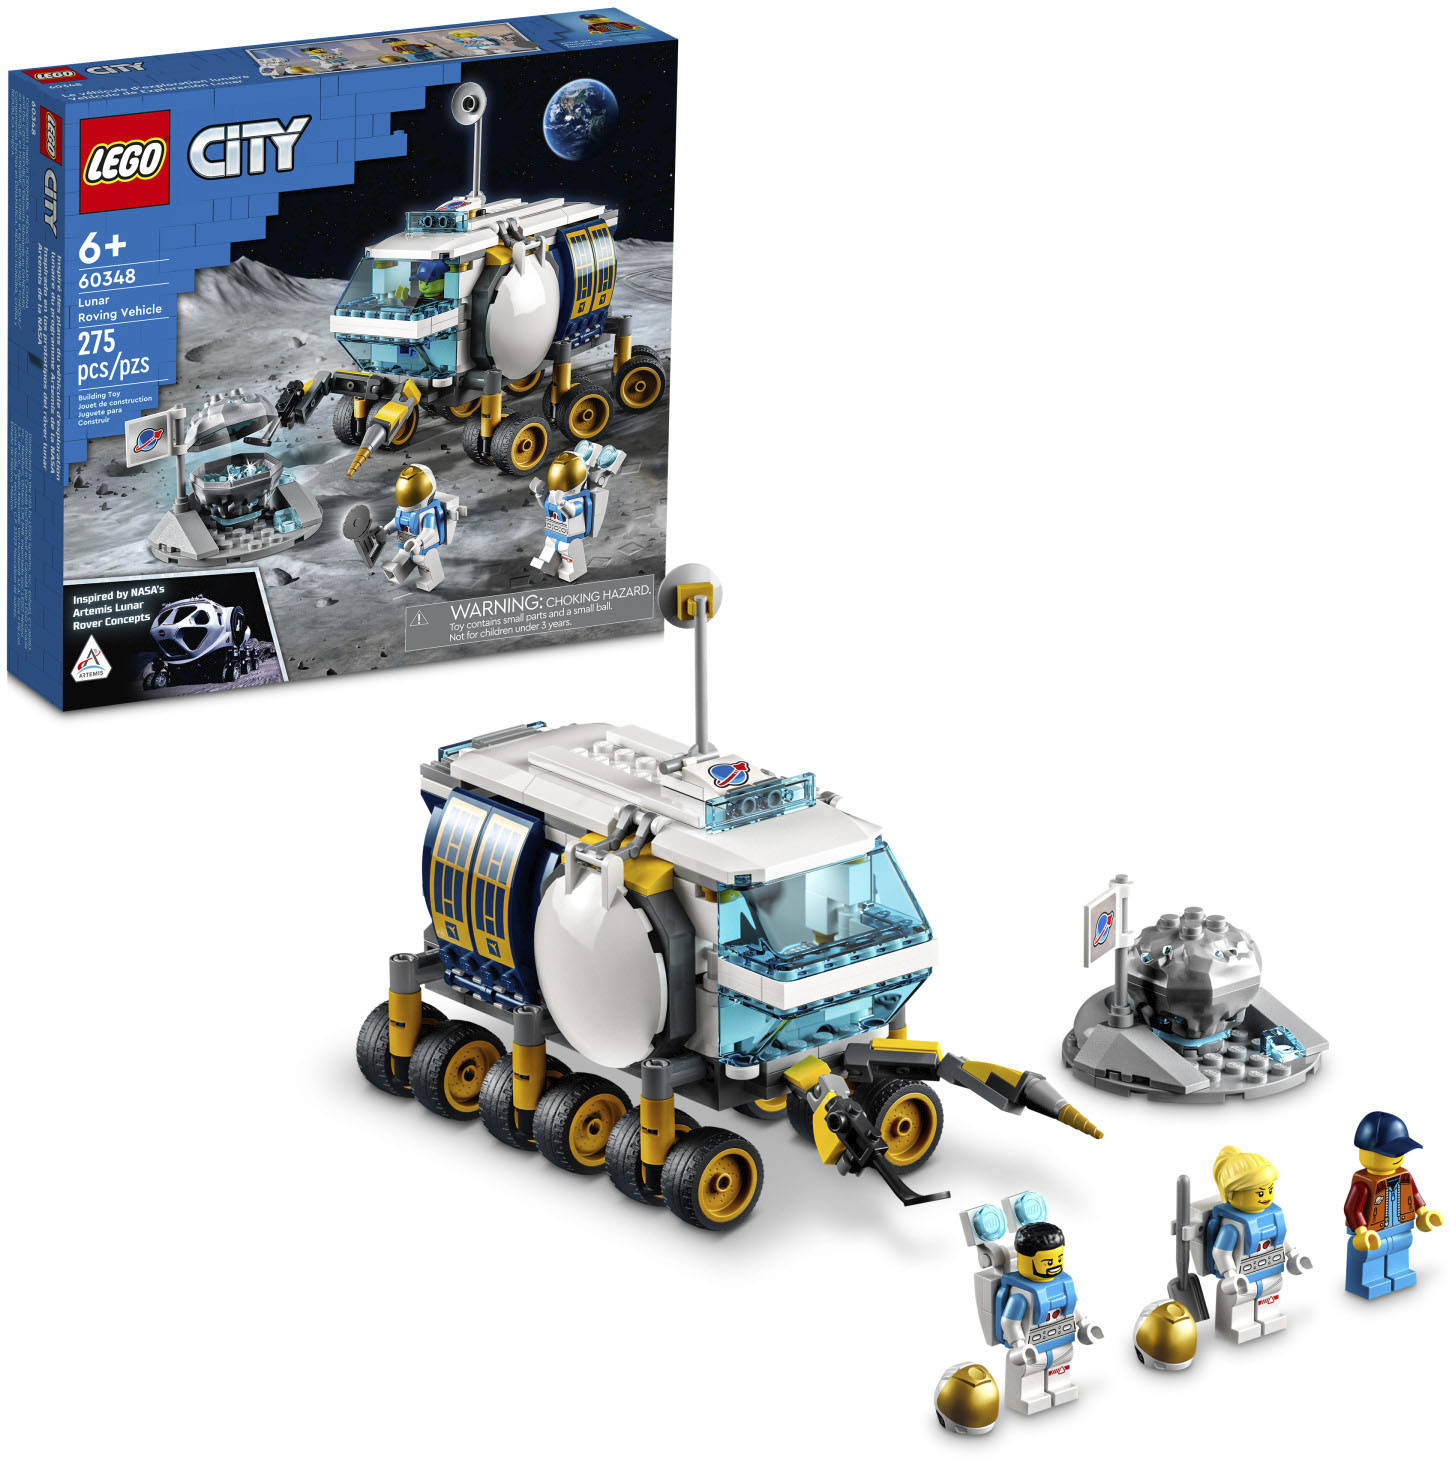 LEGO City Lunar Roving Vehicle 60348 - Best Buy